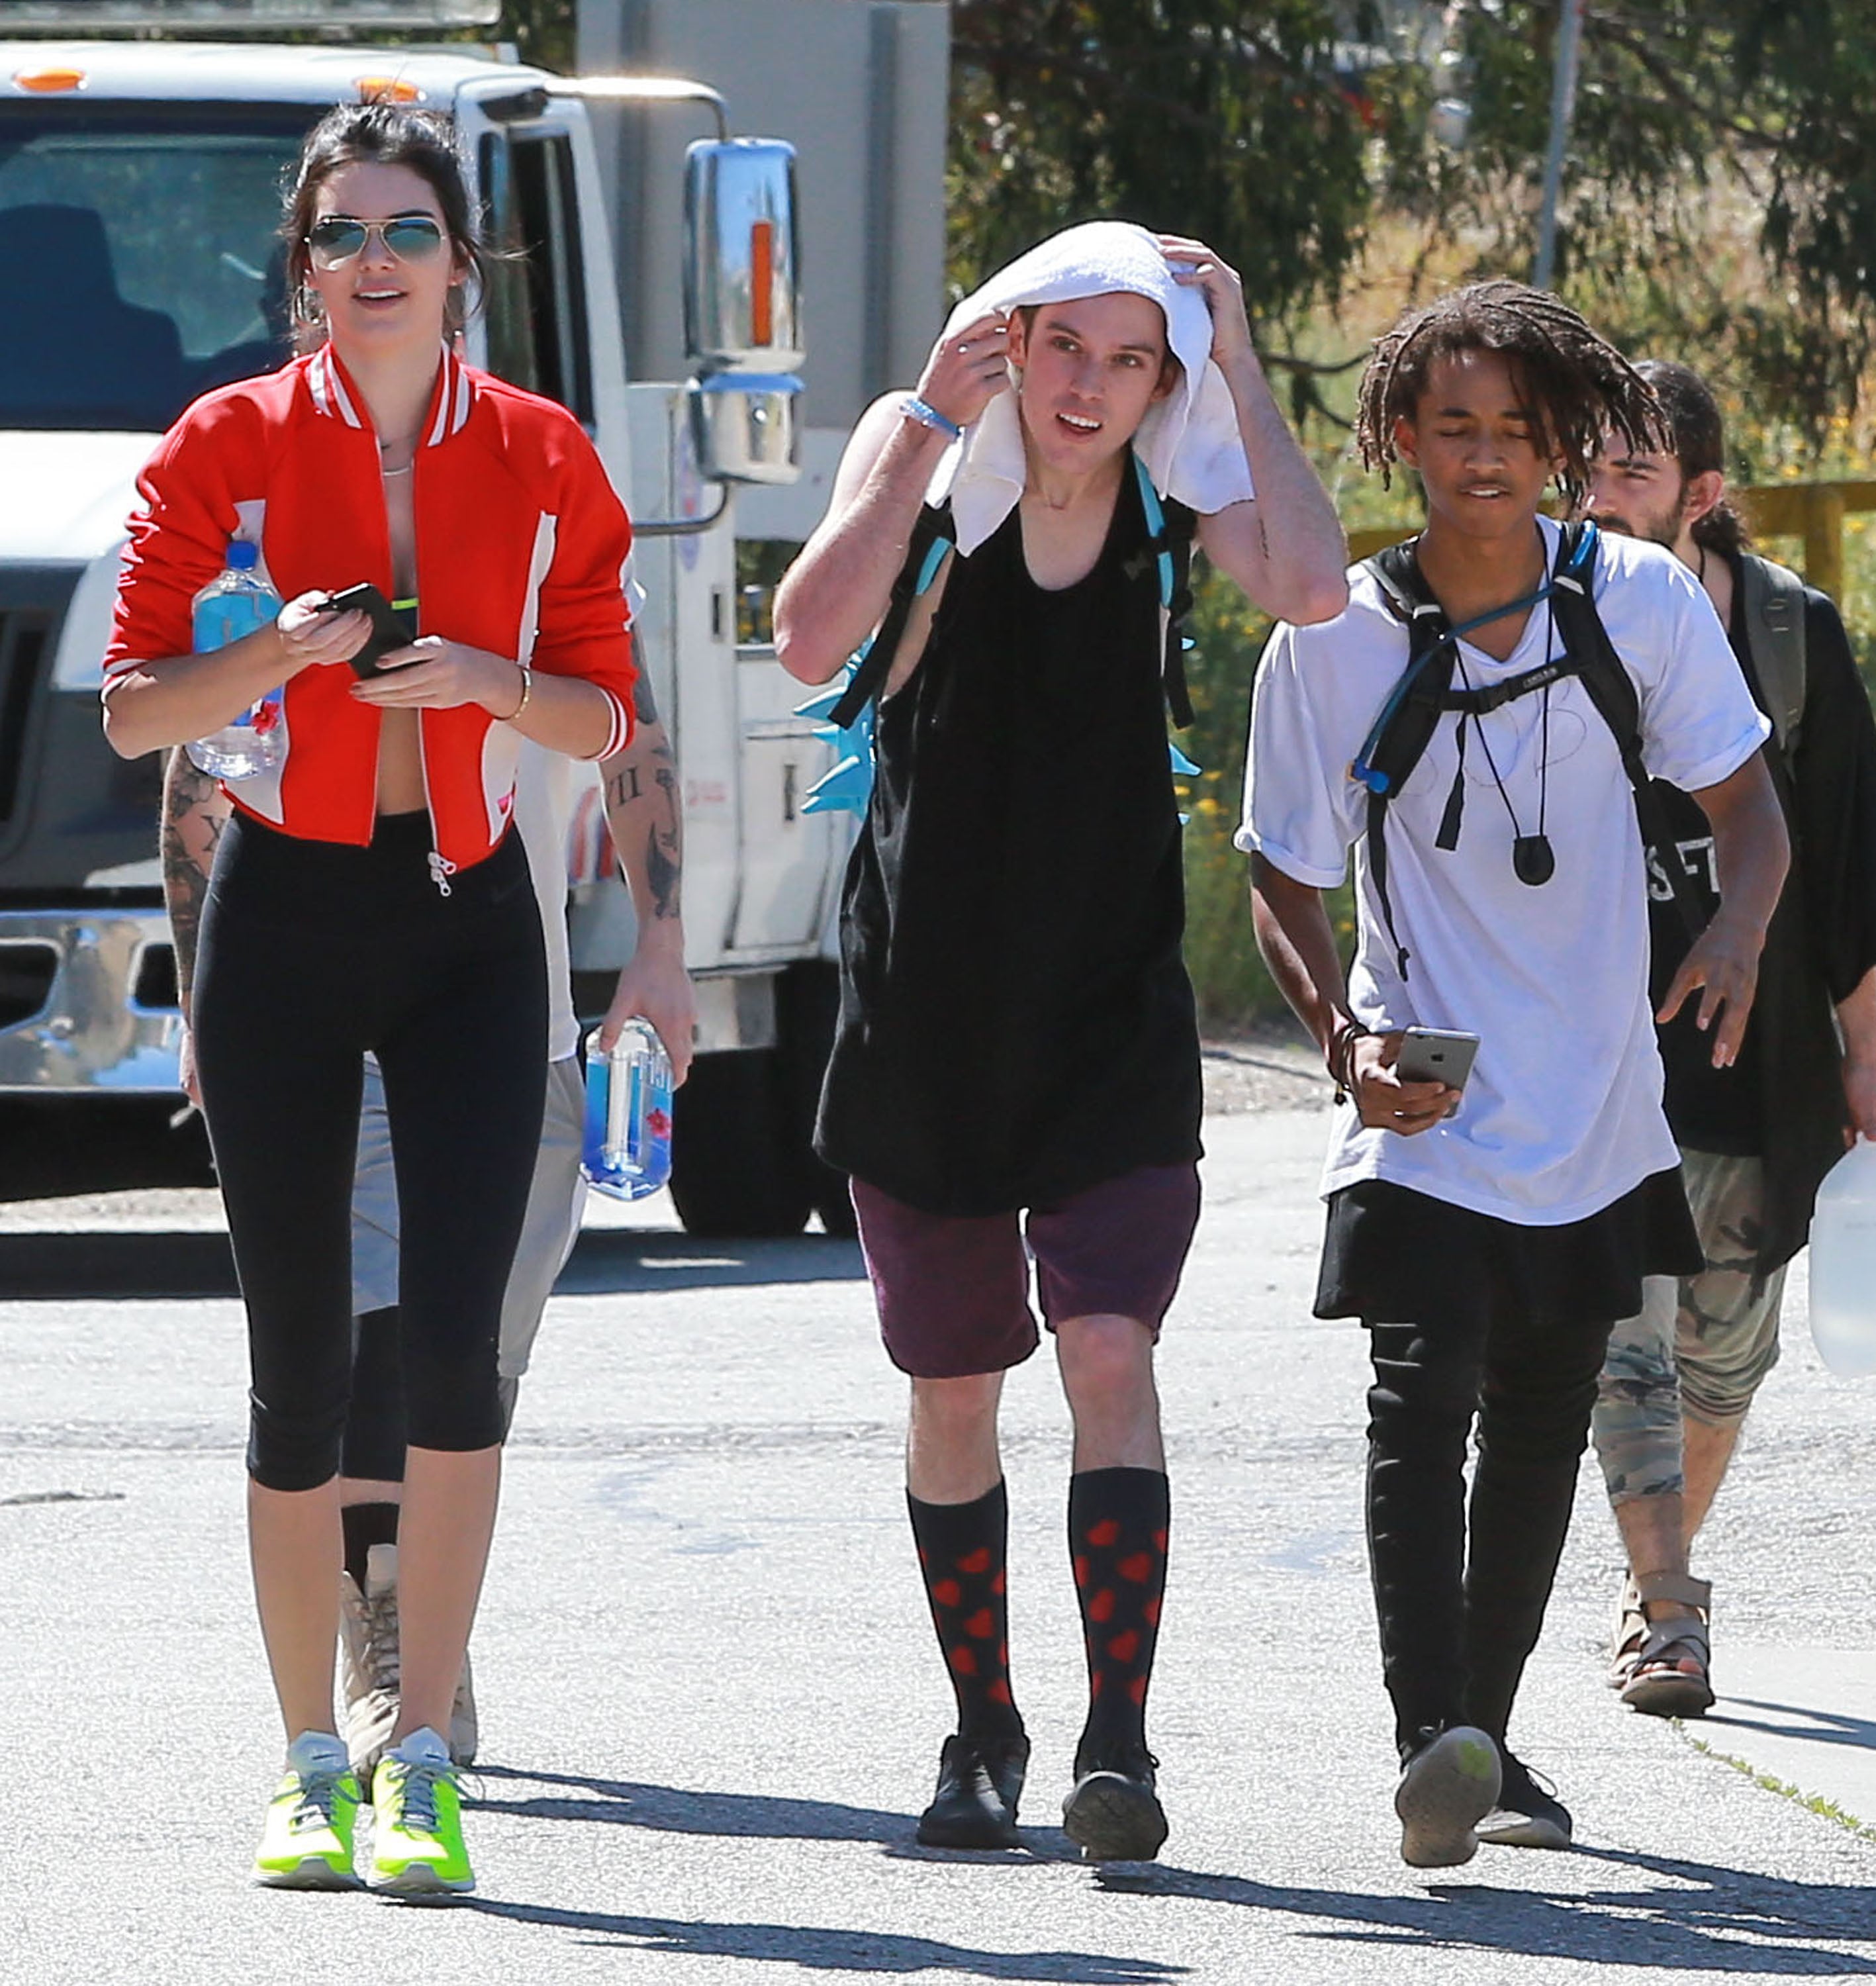 Kendall Jenner Rocks Sports Bra, Spandex on Hike With Jaden Smith